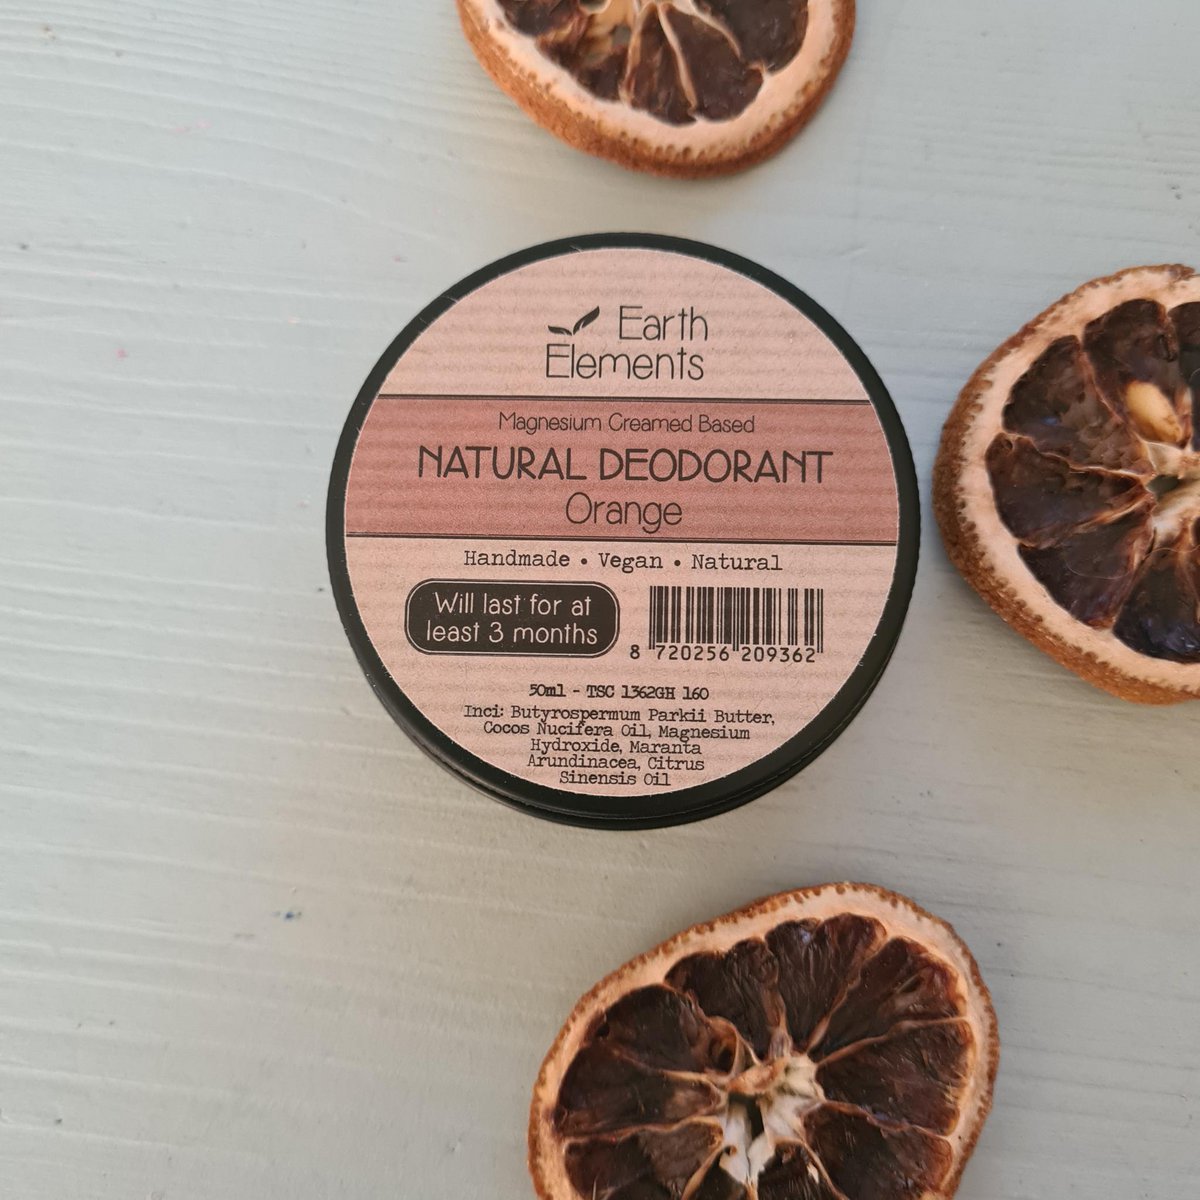 Natuurlijke deodorant Orange, zonder bakingsoda